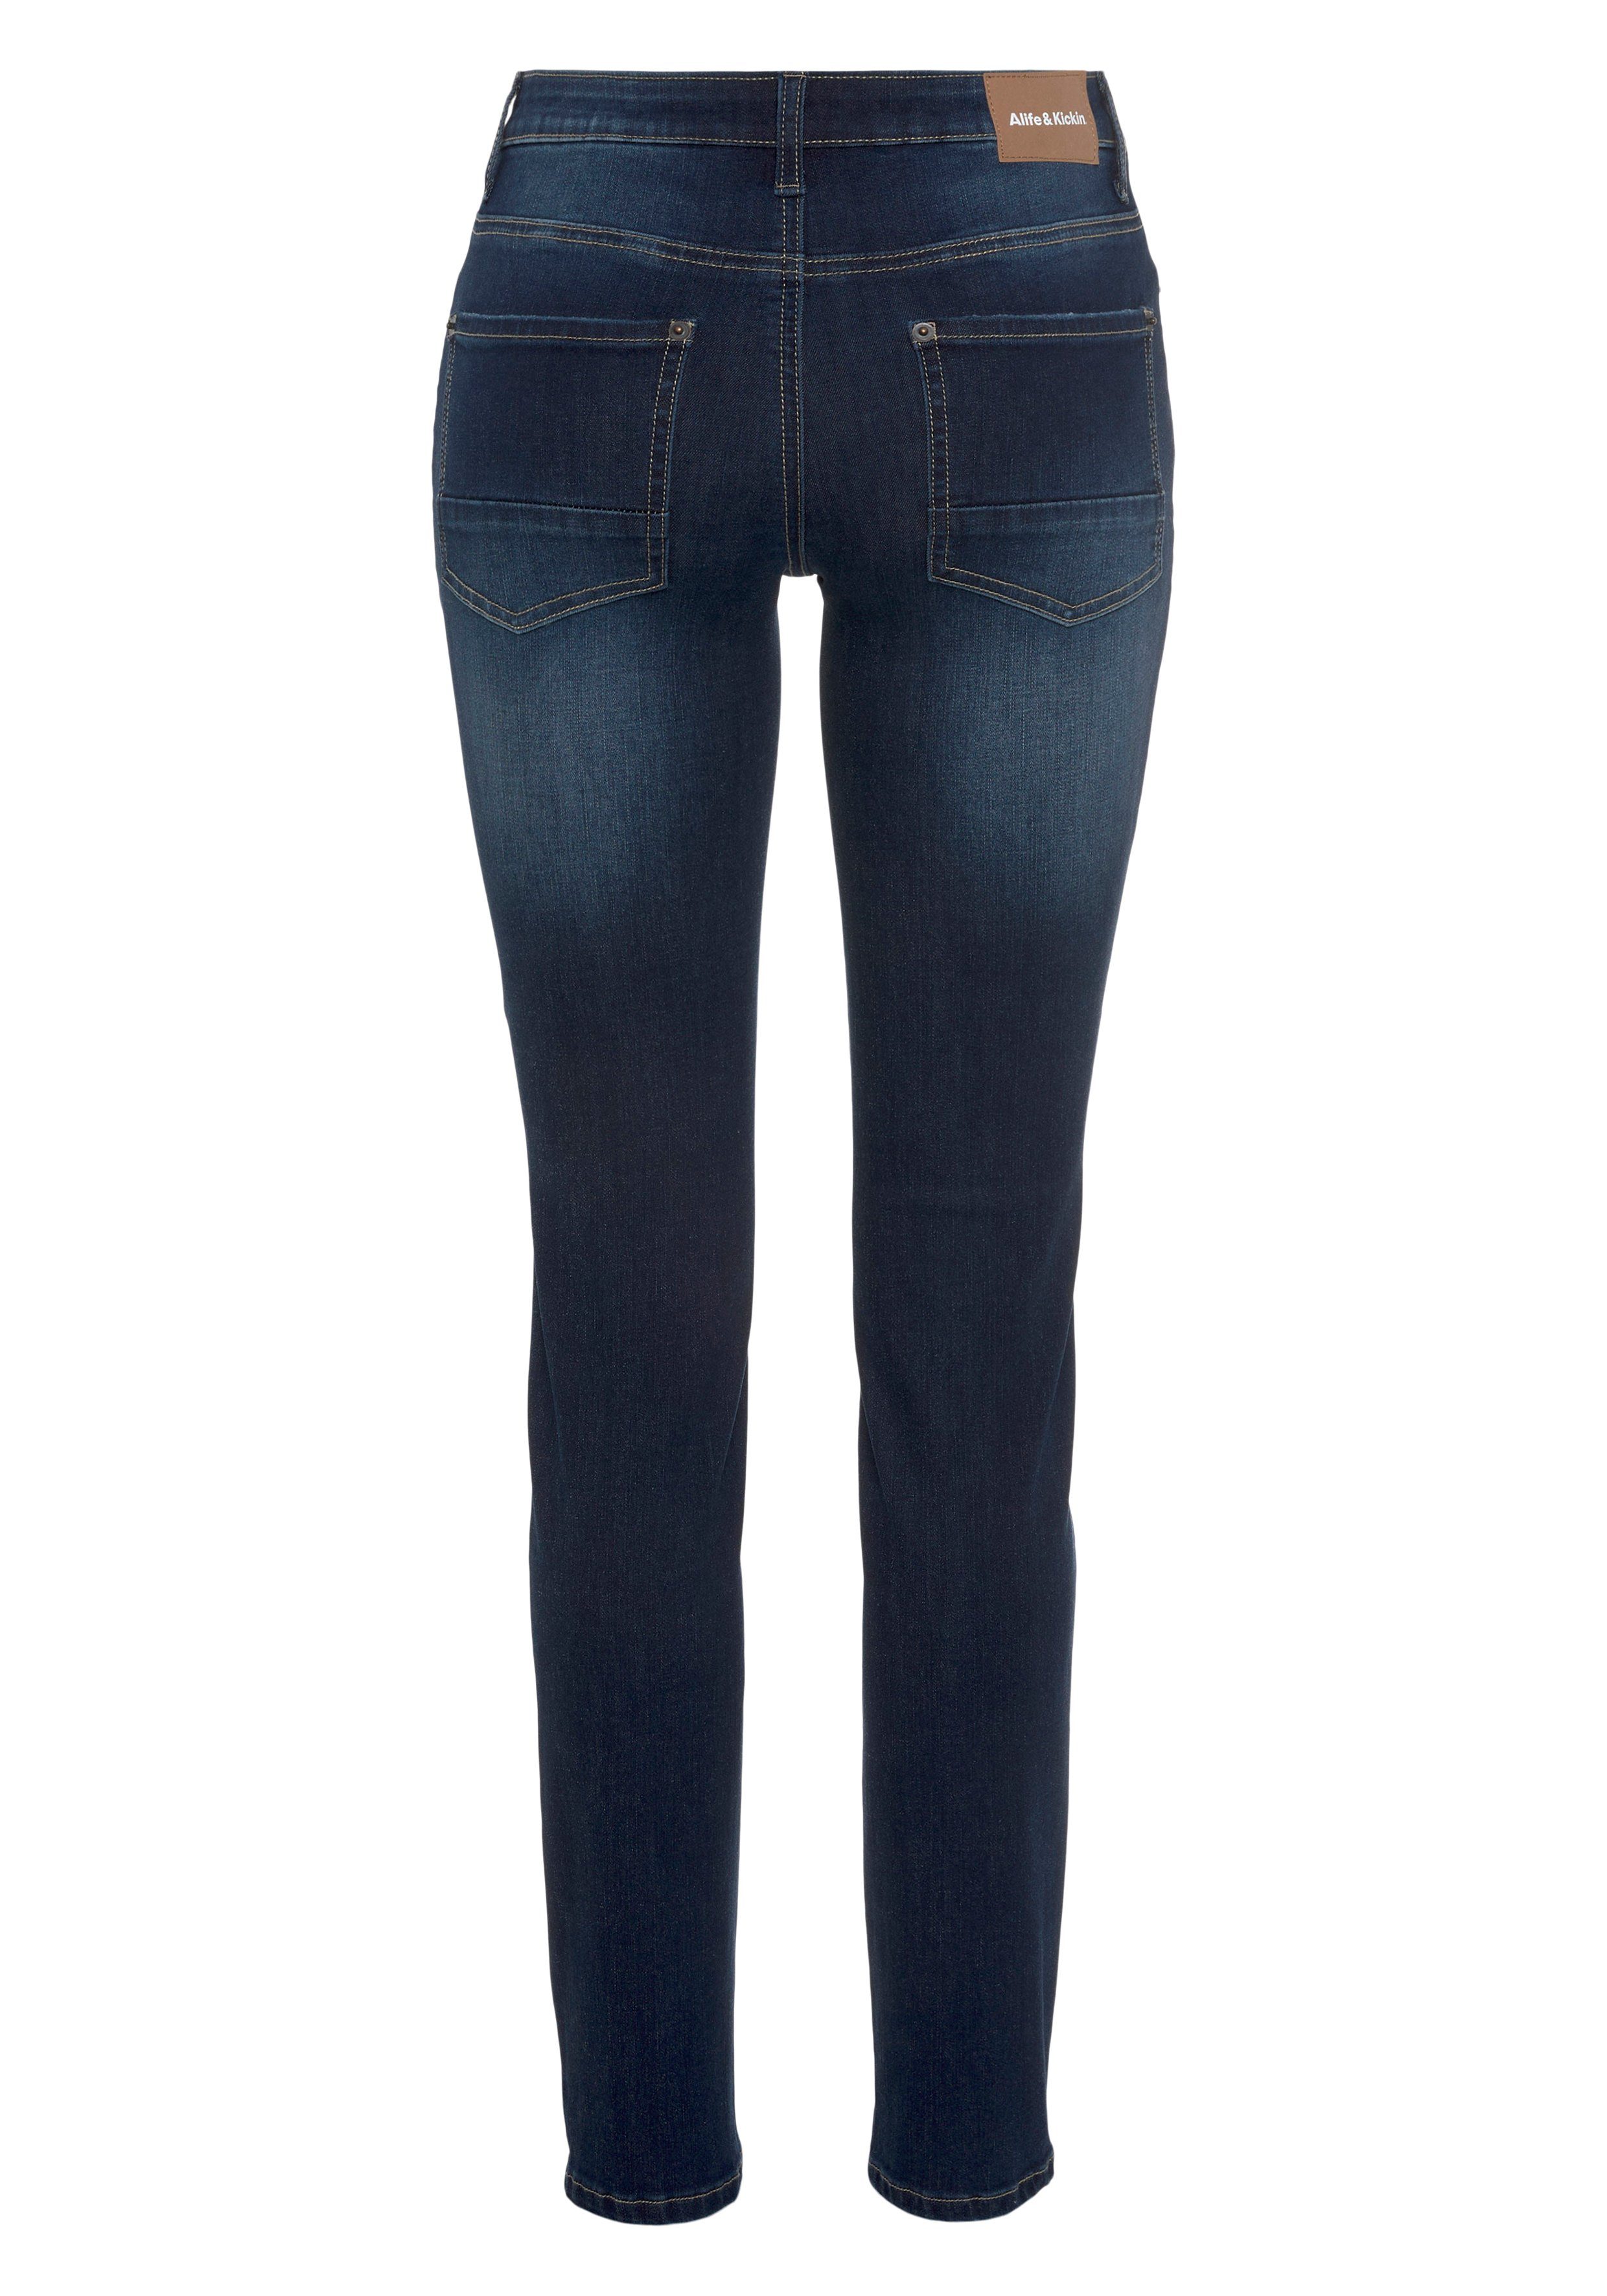 blue Low-rise-Jeans NEUE Kickin KOLLEKTION Alife used & NolaAK Dark